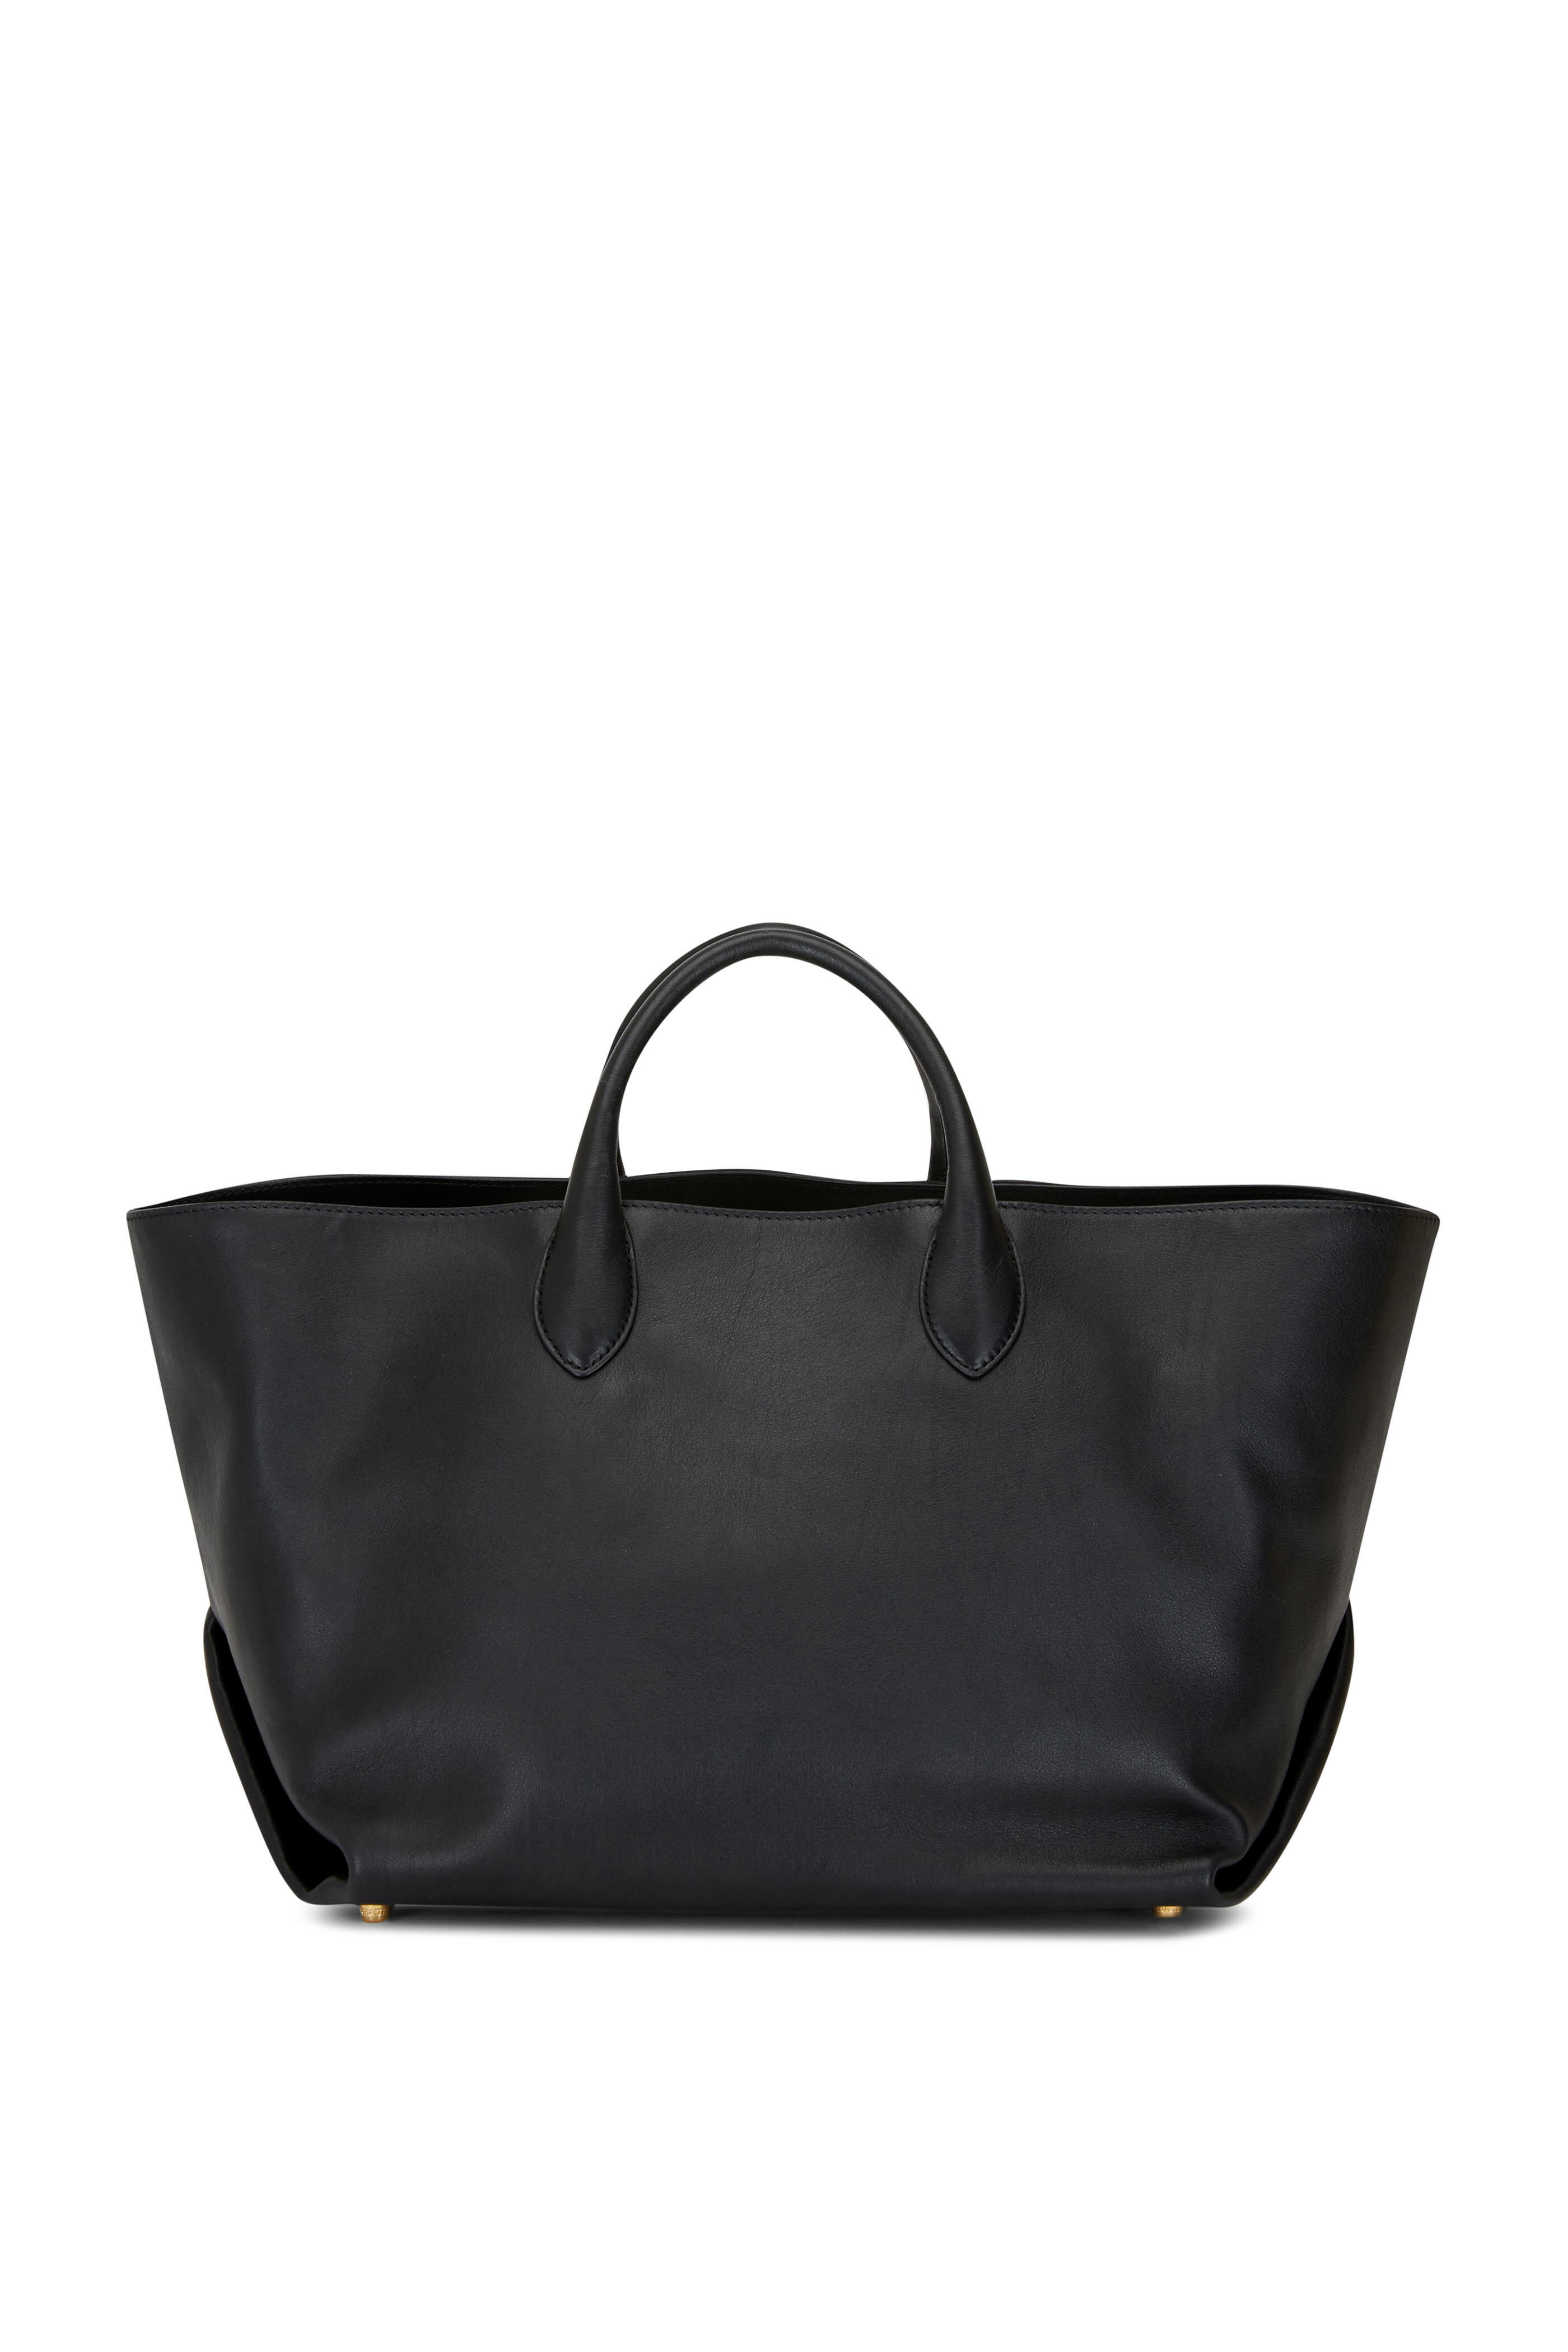 Khaite - Amelia Black Leather Envelope Medium Tote Bag